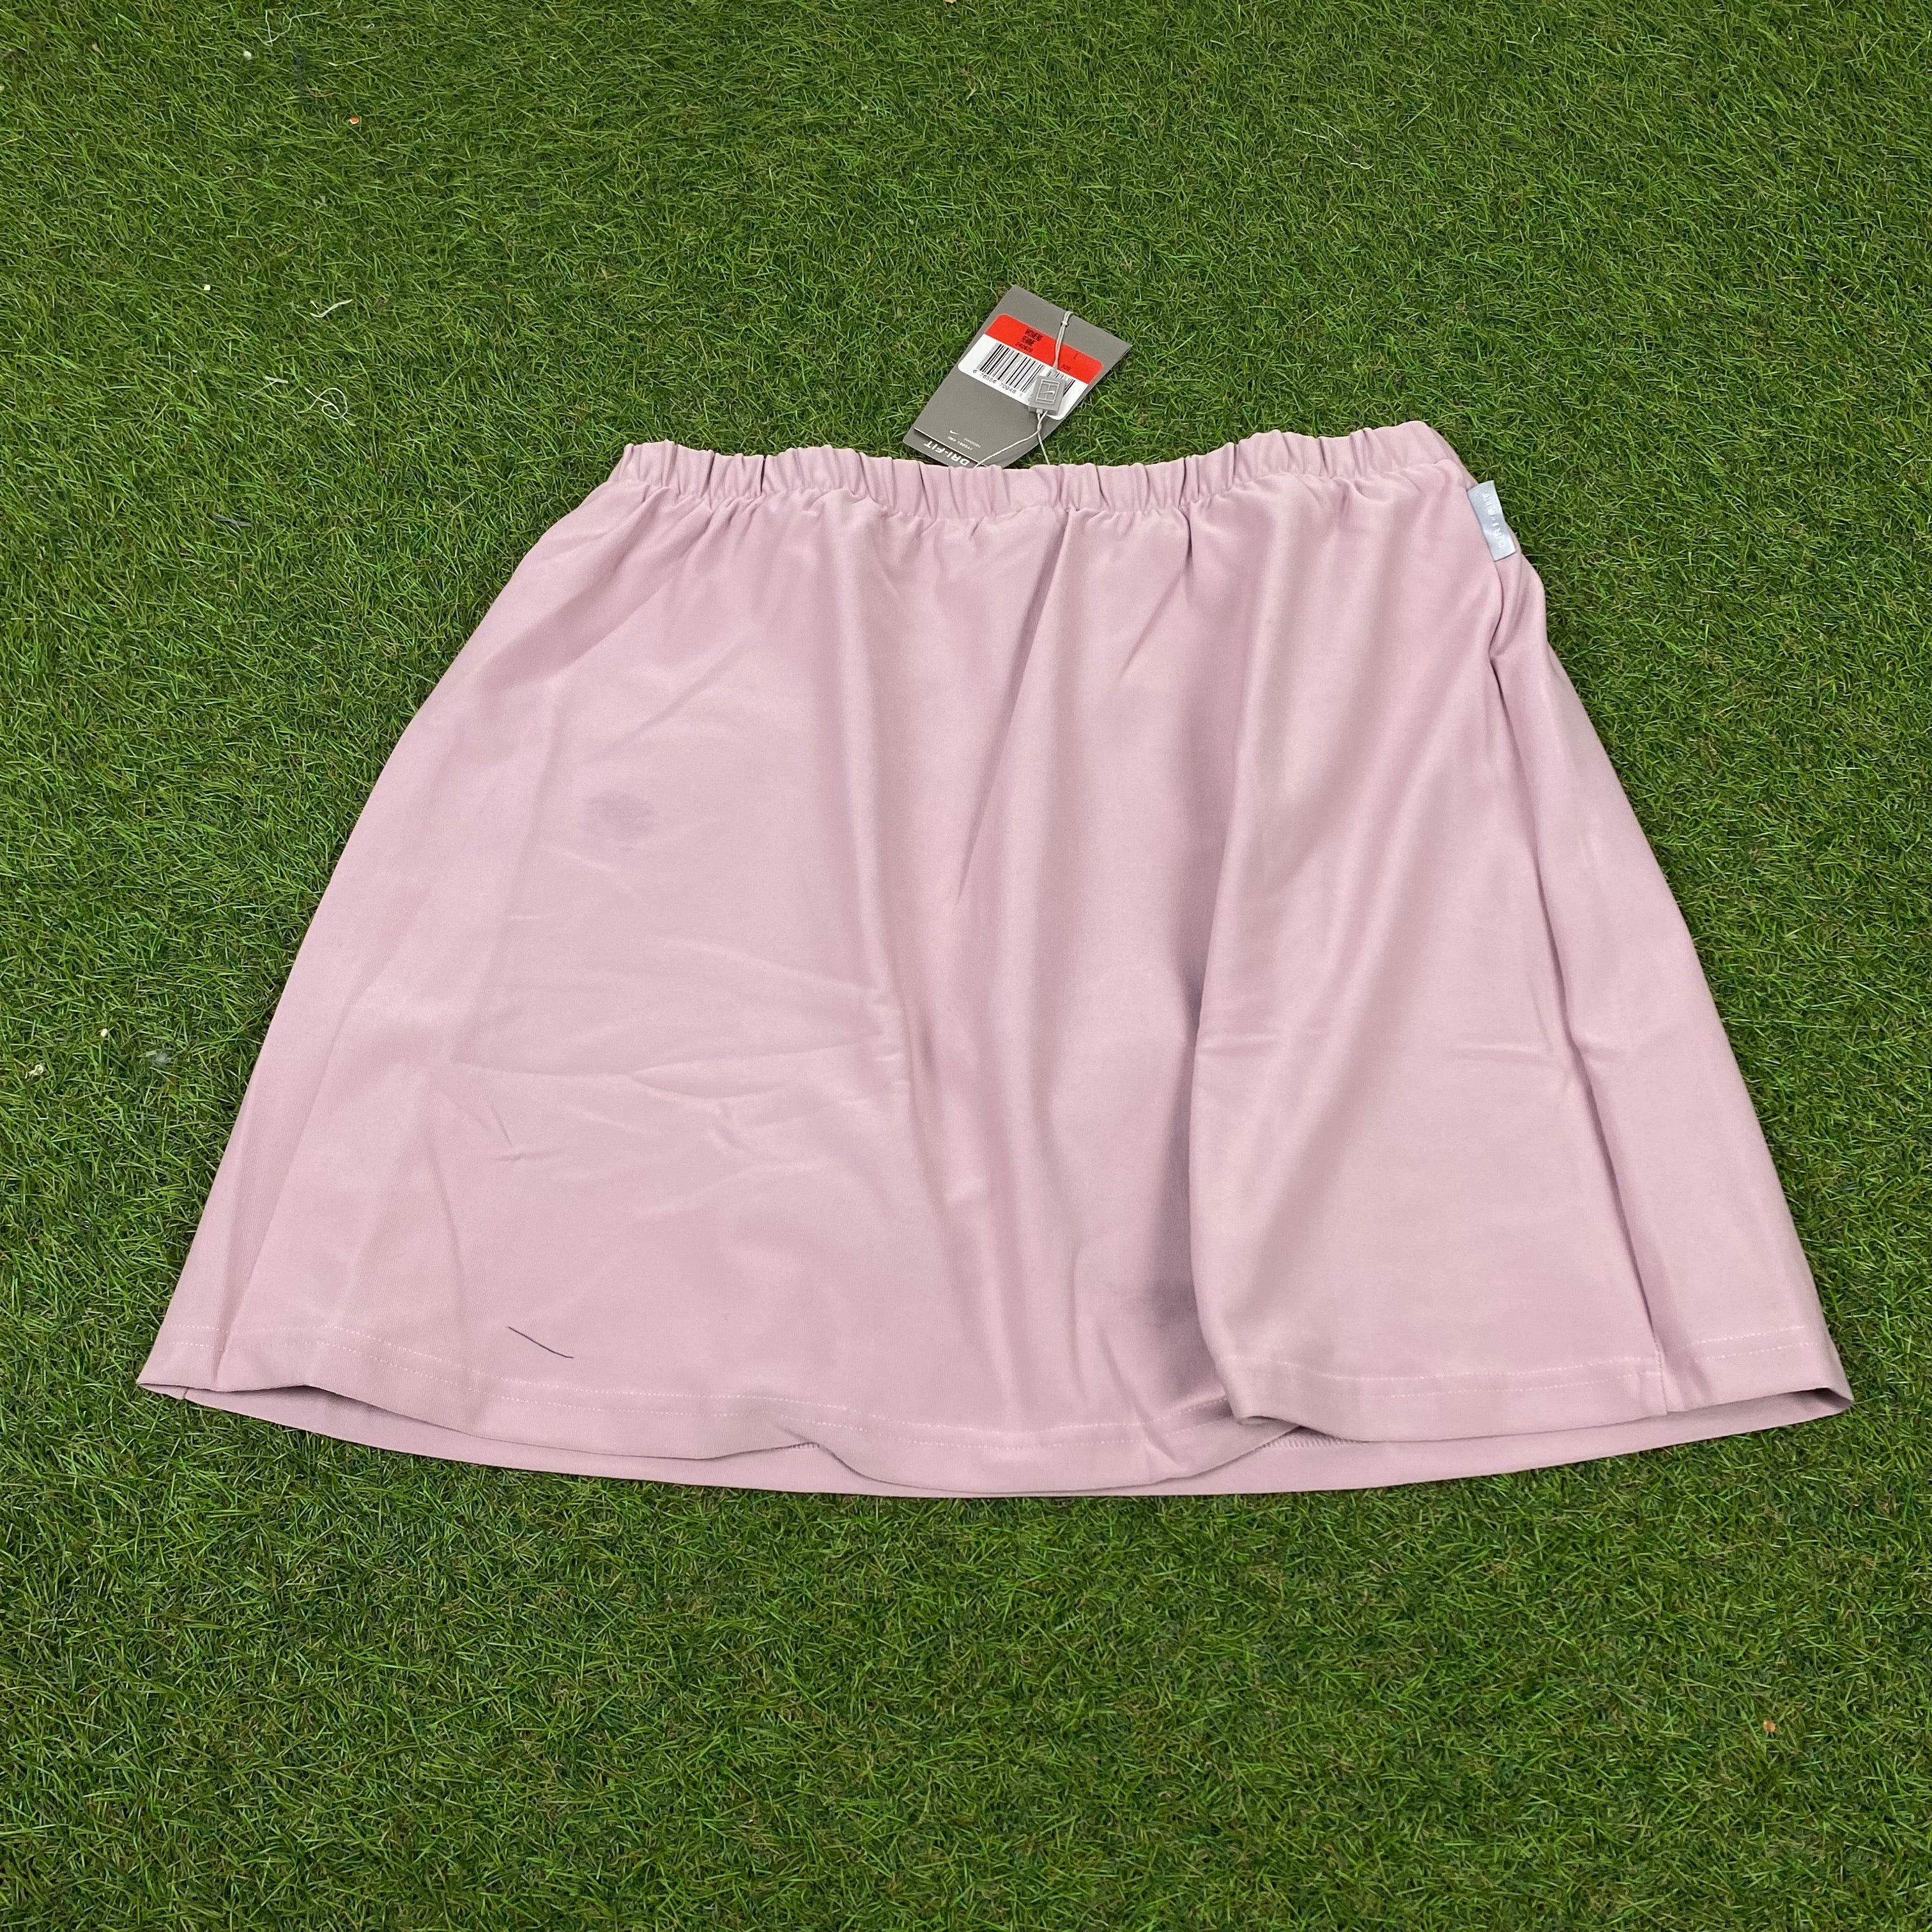 Vintage Nike Skirt Skort Pink XL